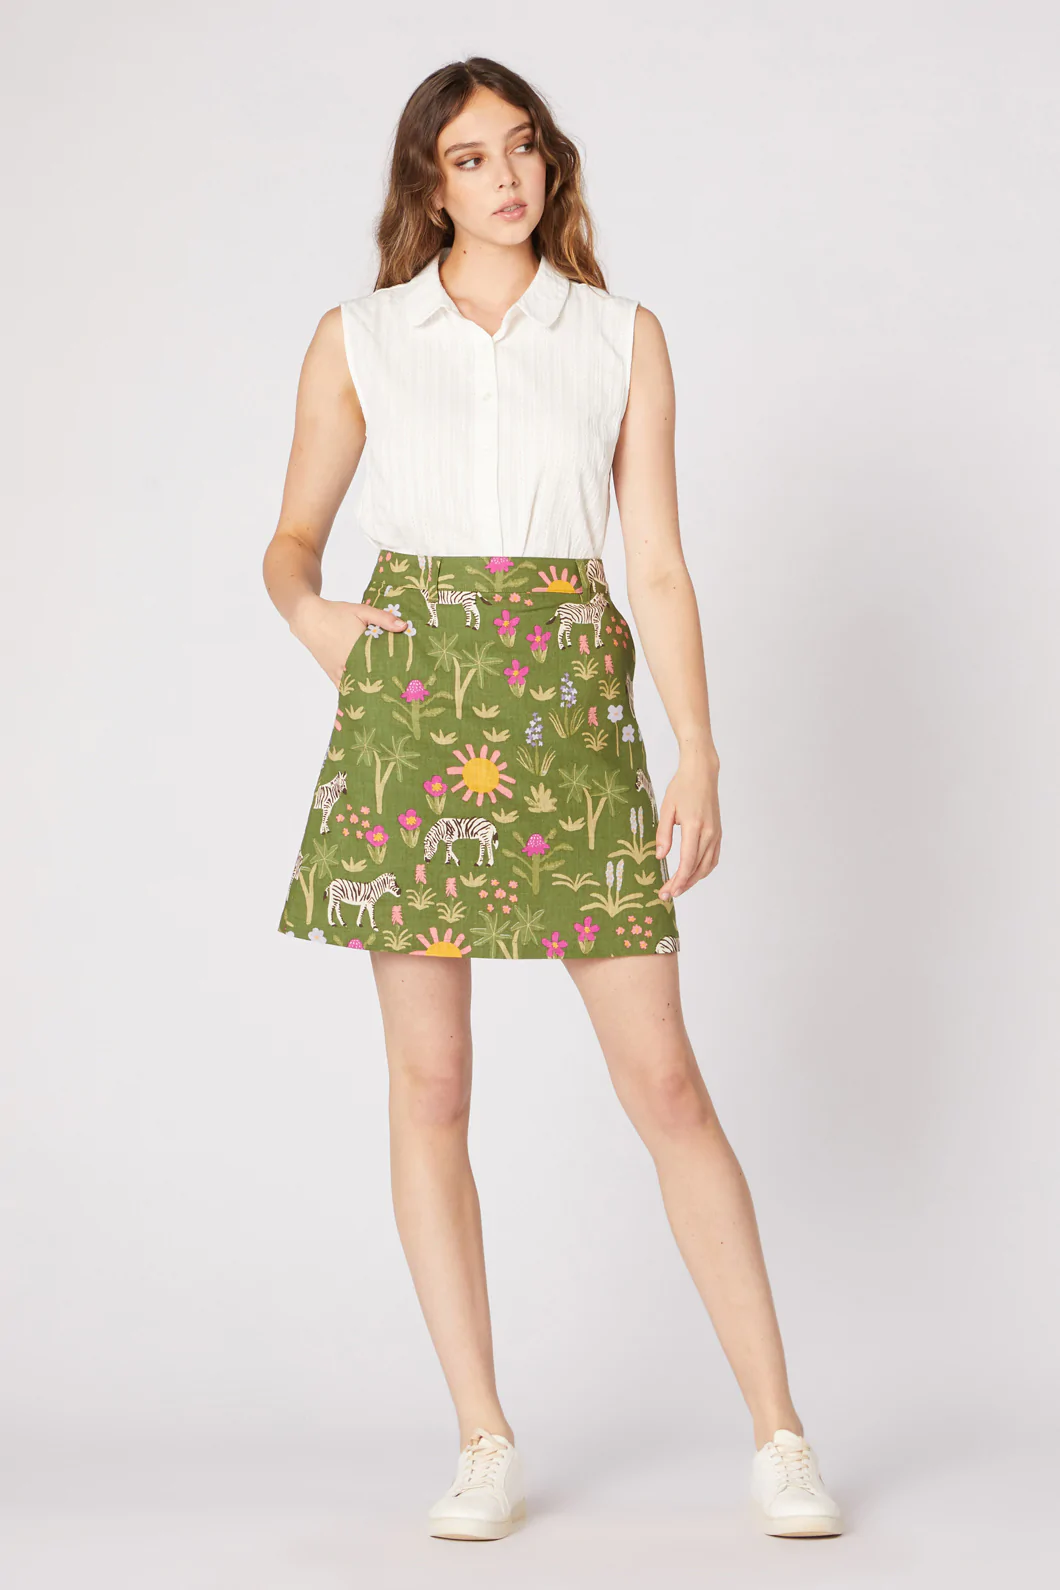 Sunshine Zebra Skirt, sz 14